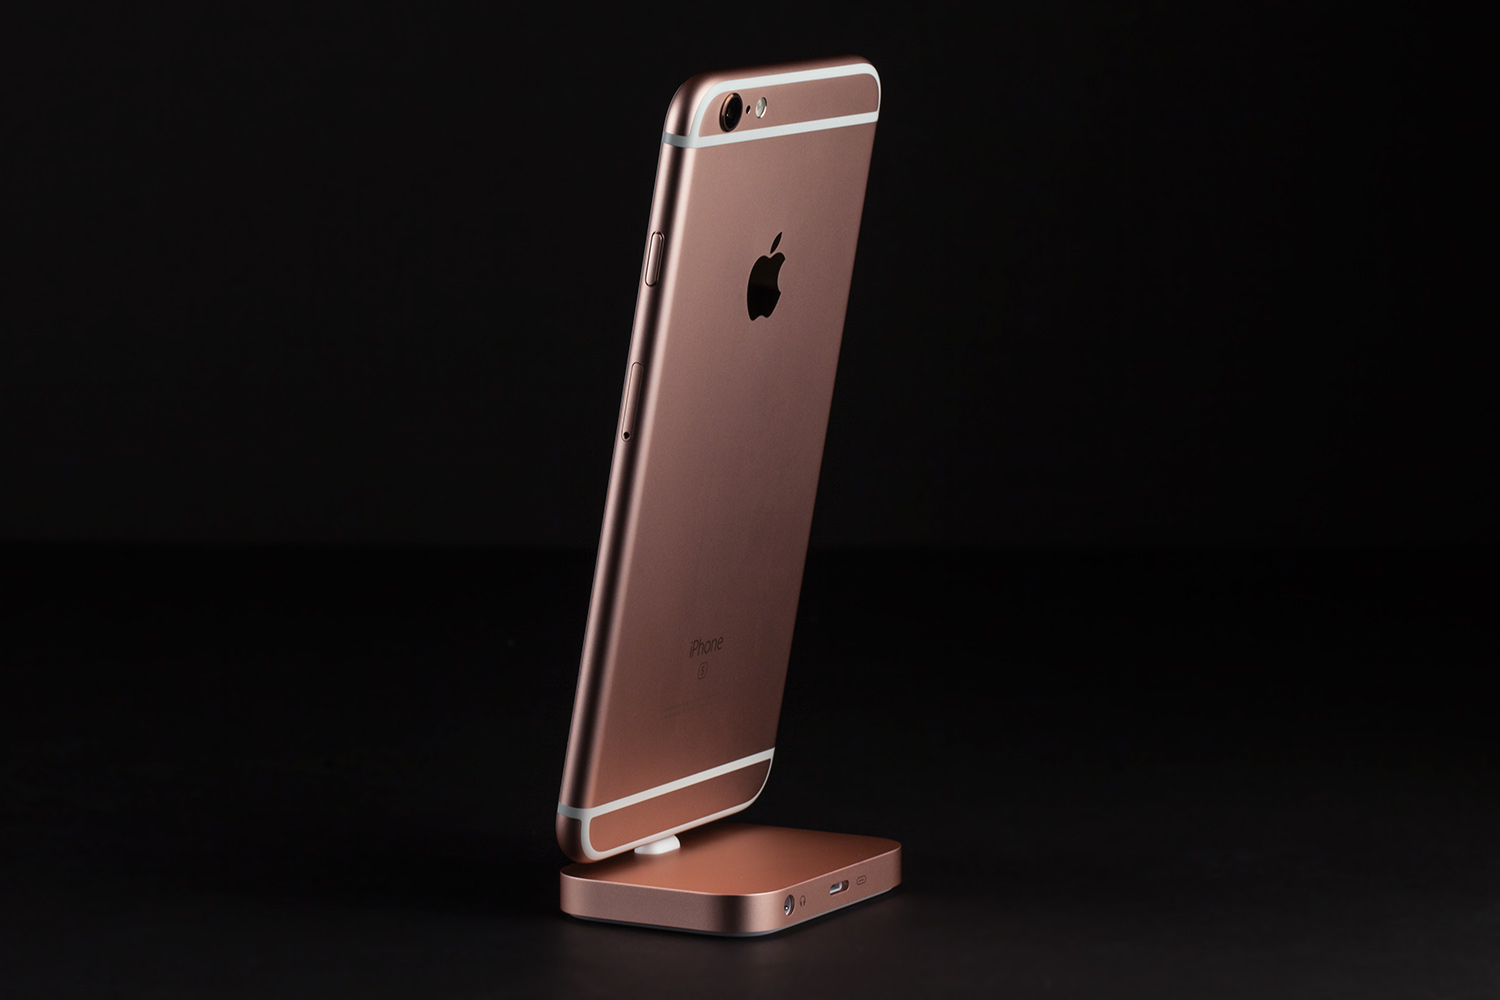 Apple iPhone 6S Plus -  External Reviews